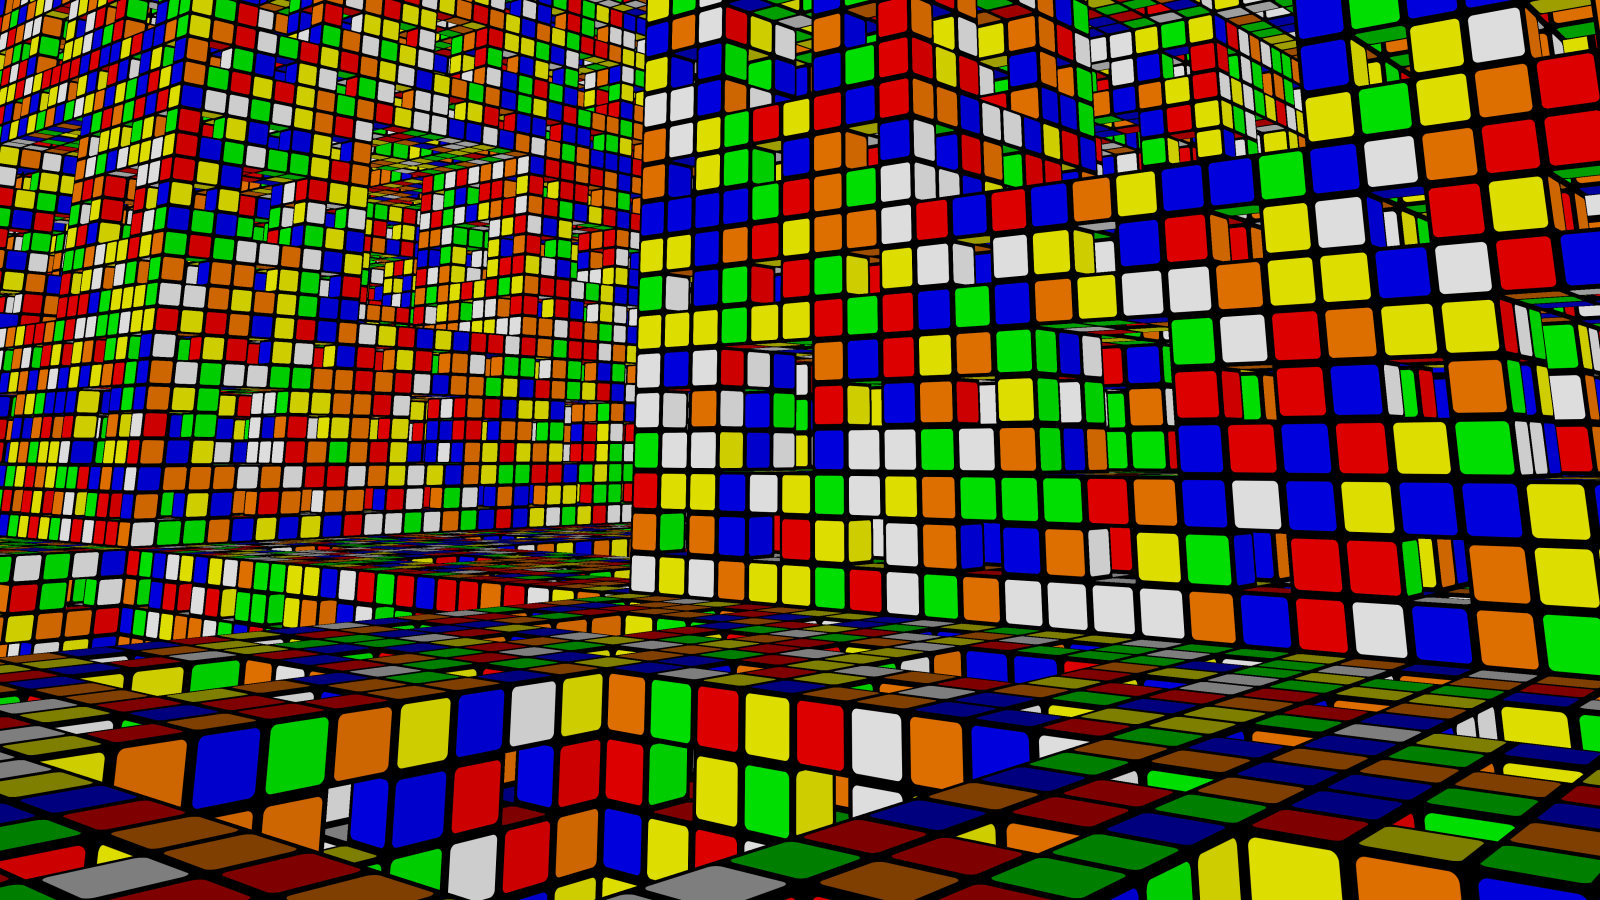 Digital Art Tiles Square Colorful Cube 3D Rubiks Cube 1600x900